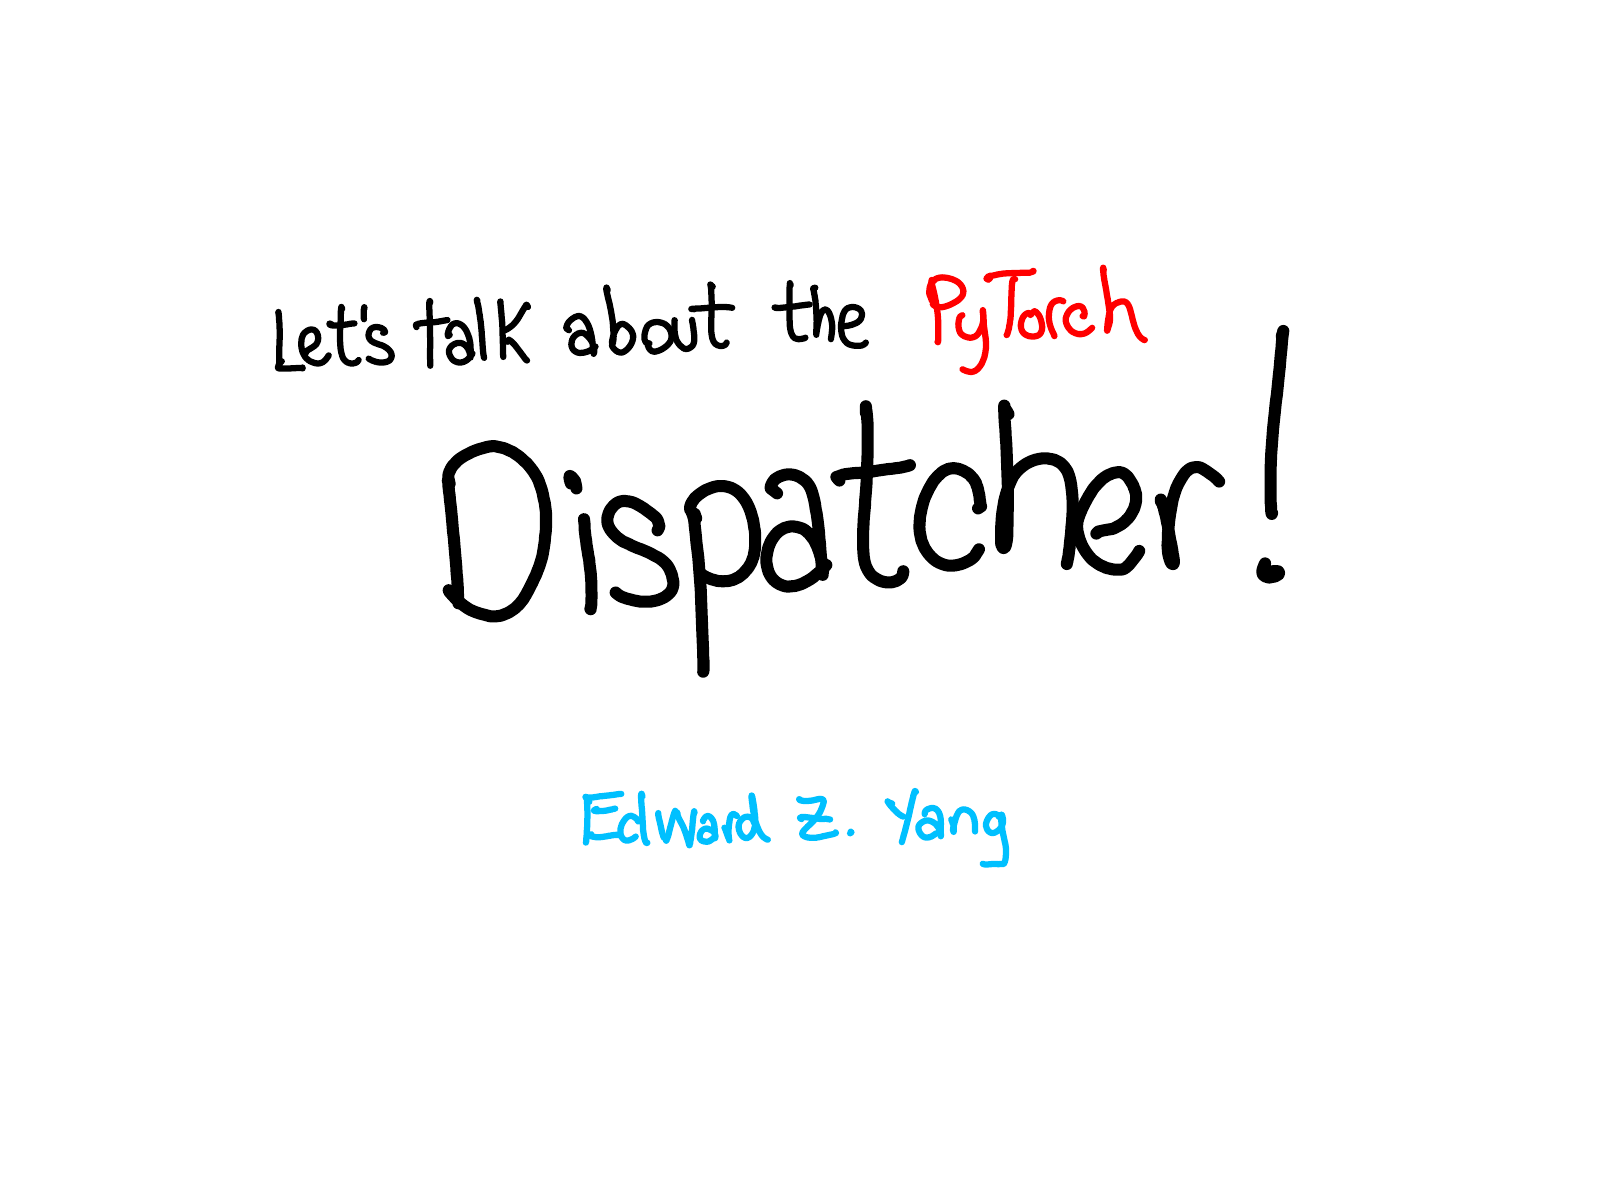 http://blog.ezyang.com/img/pytorch-dispatcher/slide-01.png